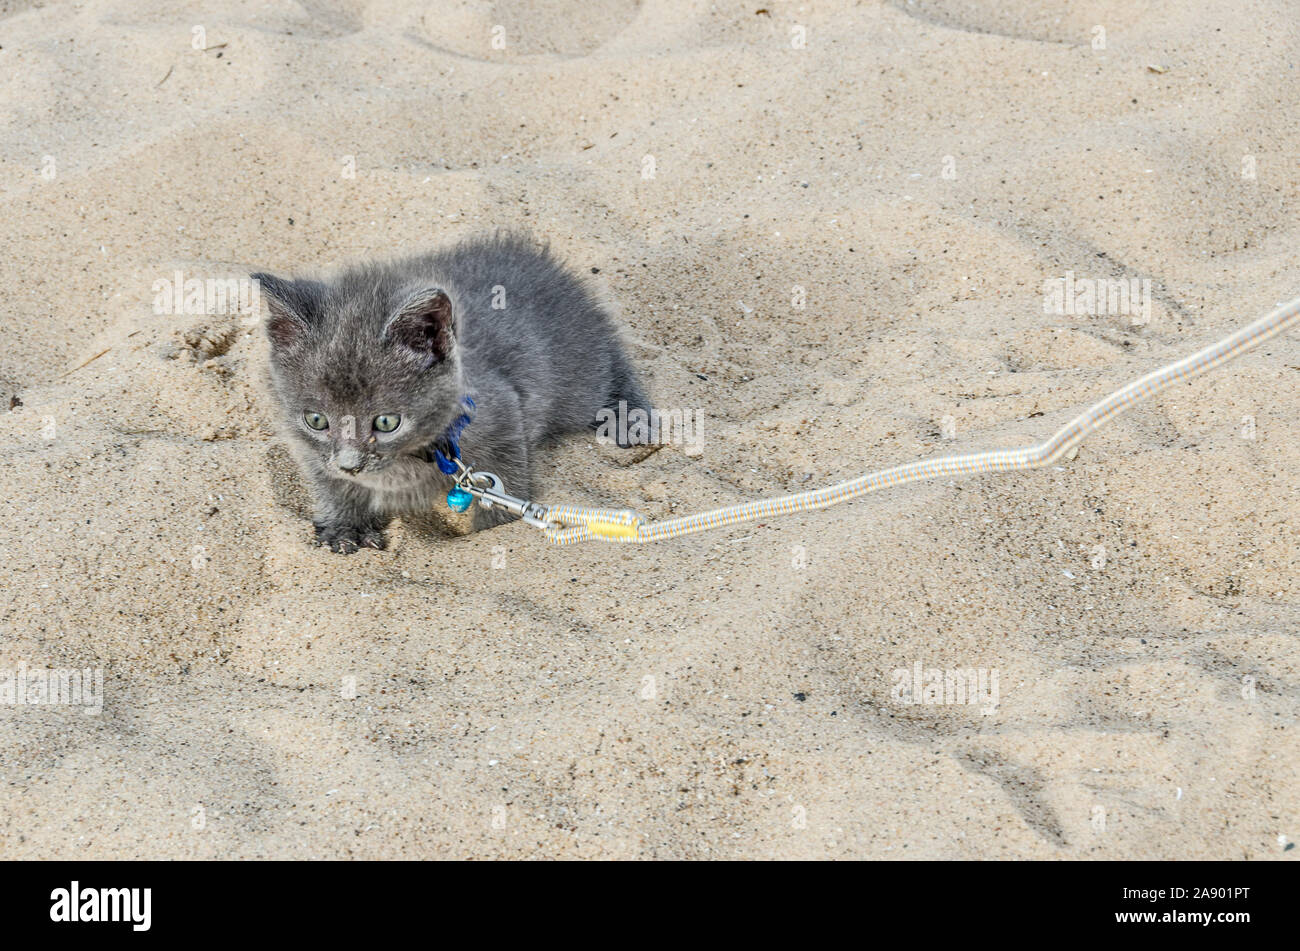 Six-week-old kitten exploring a beach on a leash Stock Photo